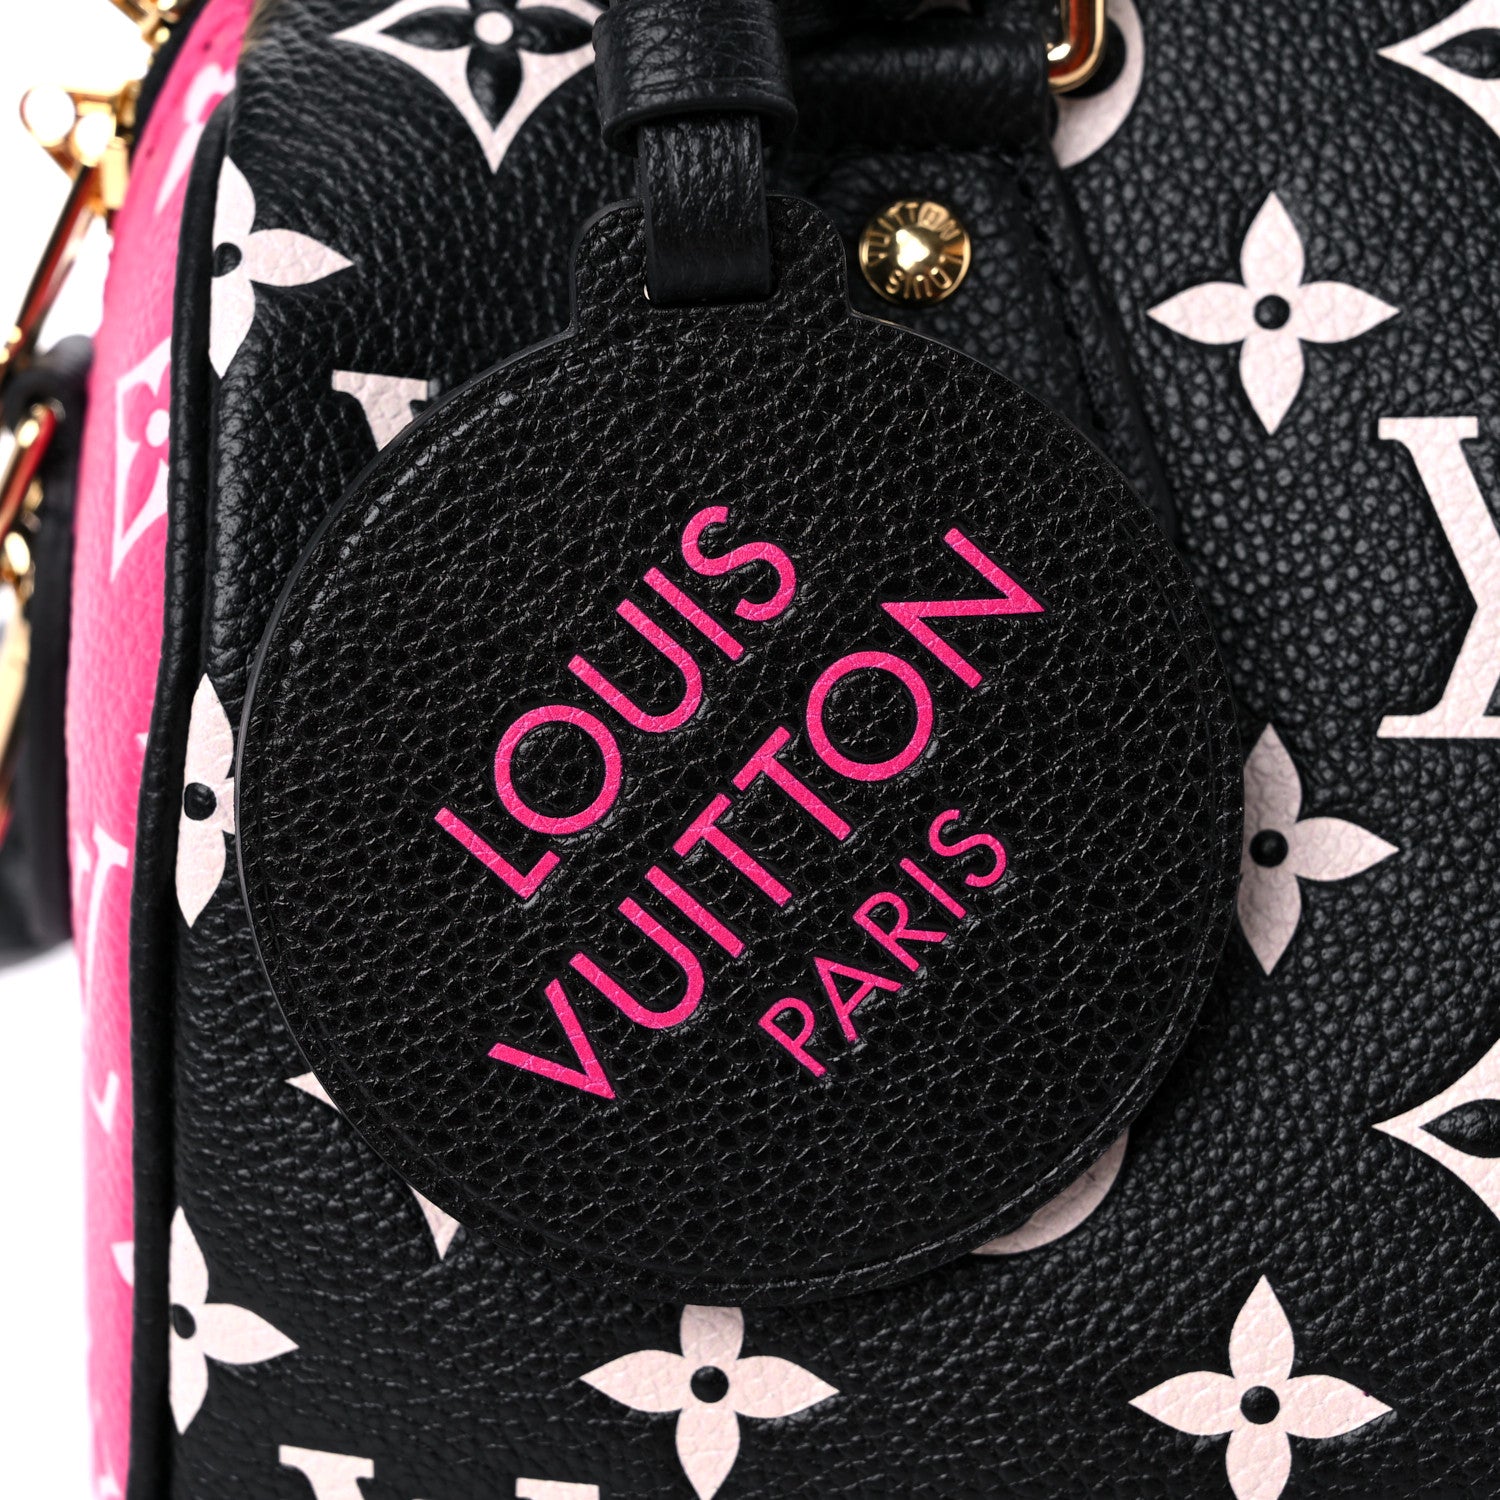 Louis Vuitton Spring in The City Empreinte Speedy Bandouliere 20 Bag in Black